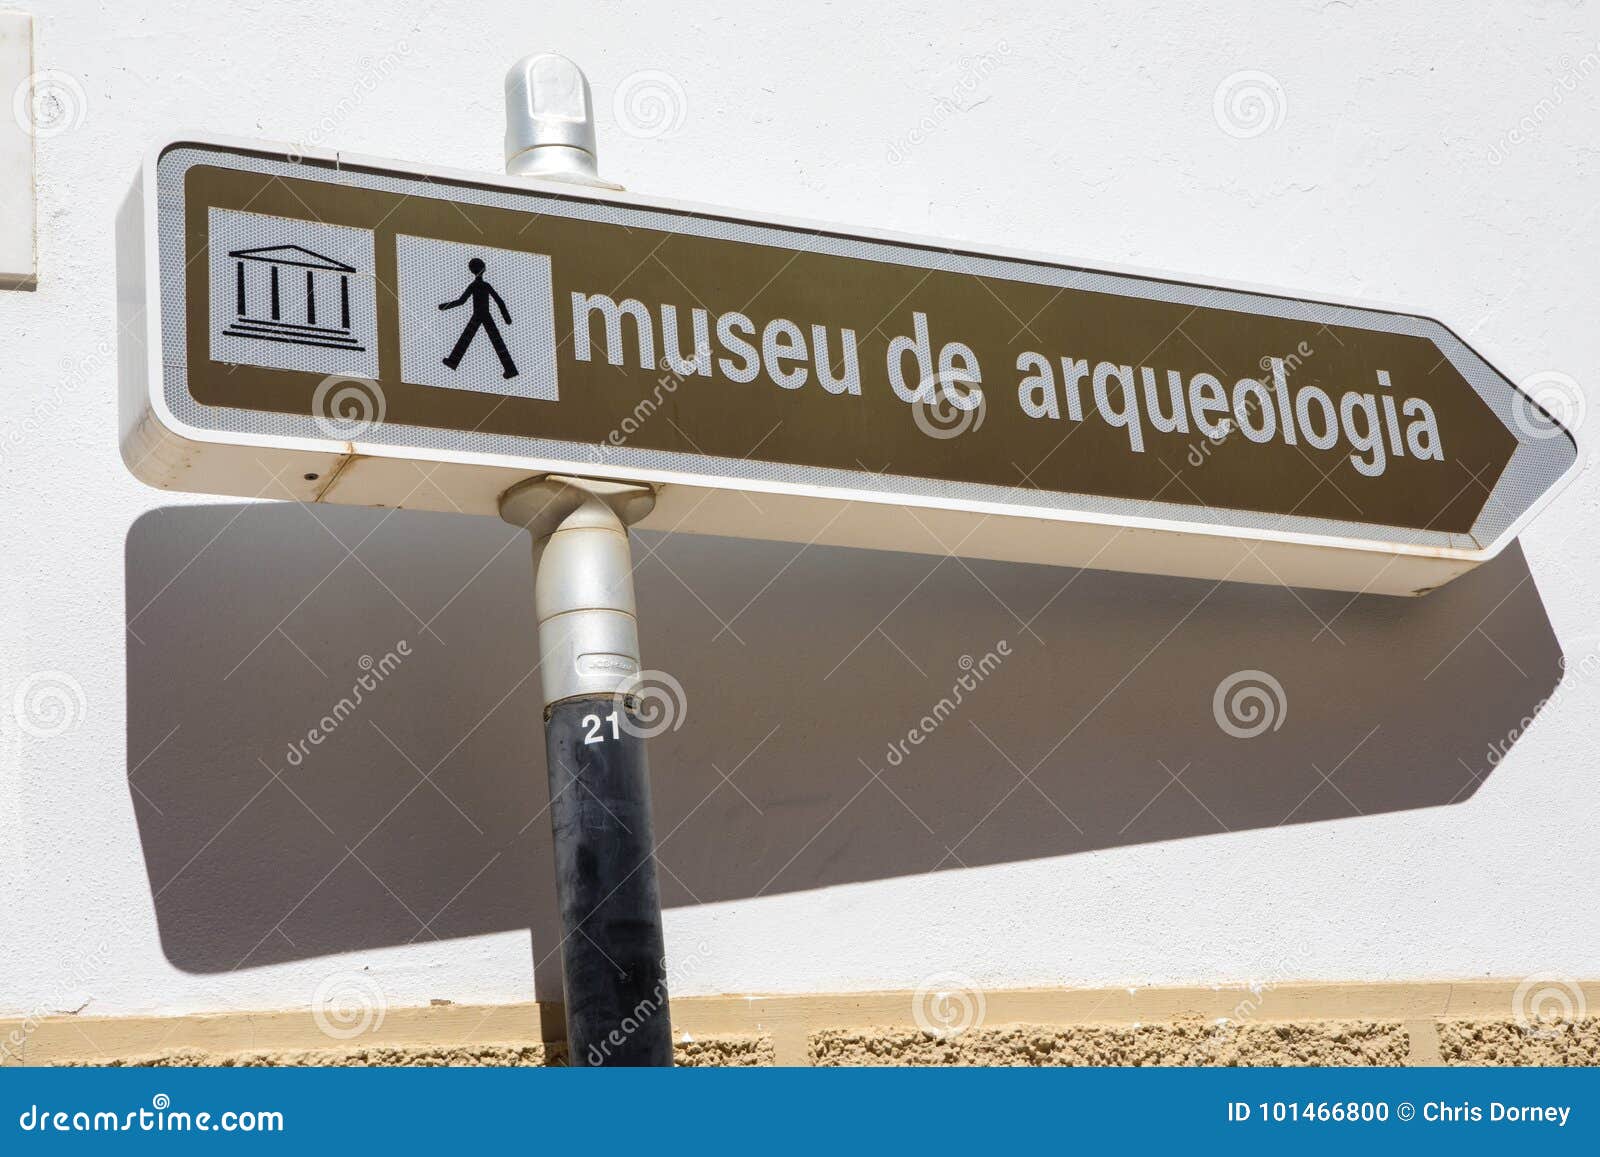 museu de arqueologia in silves portugal